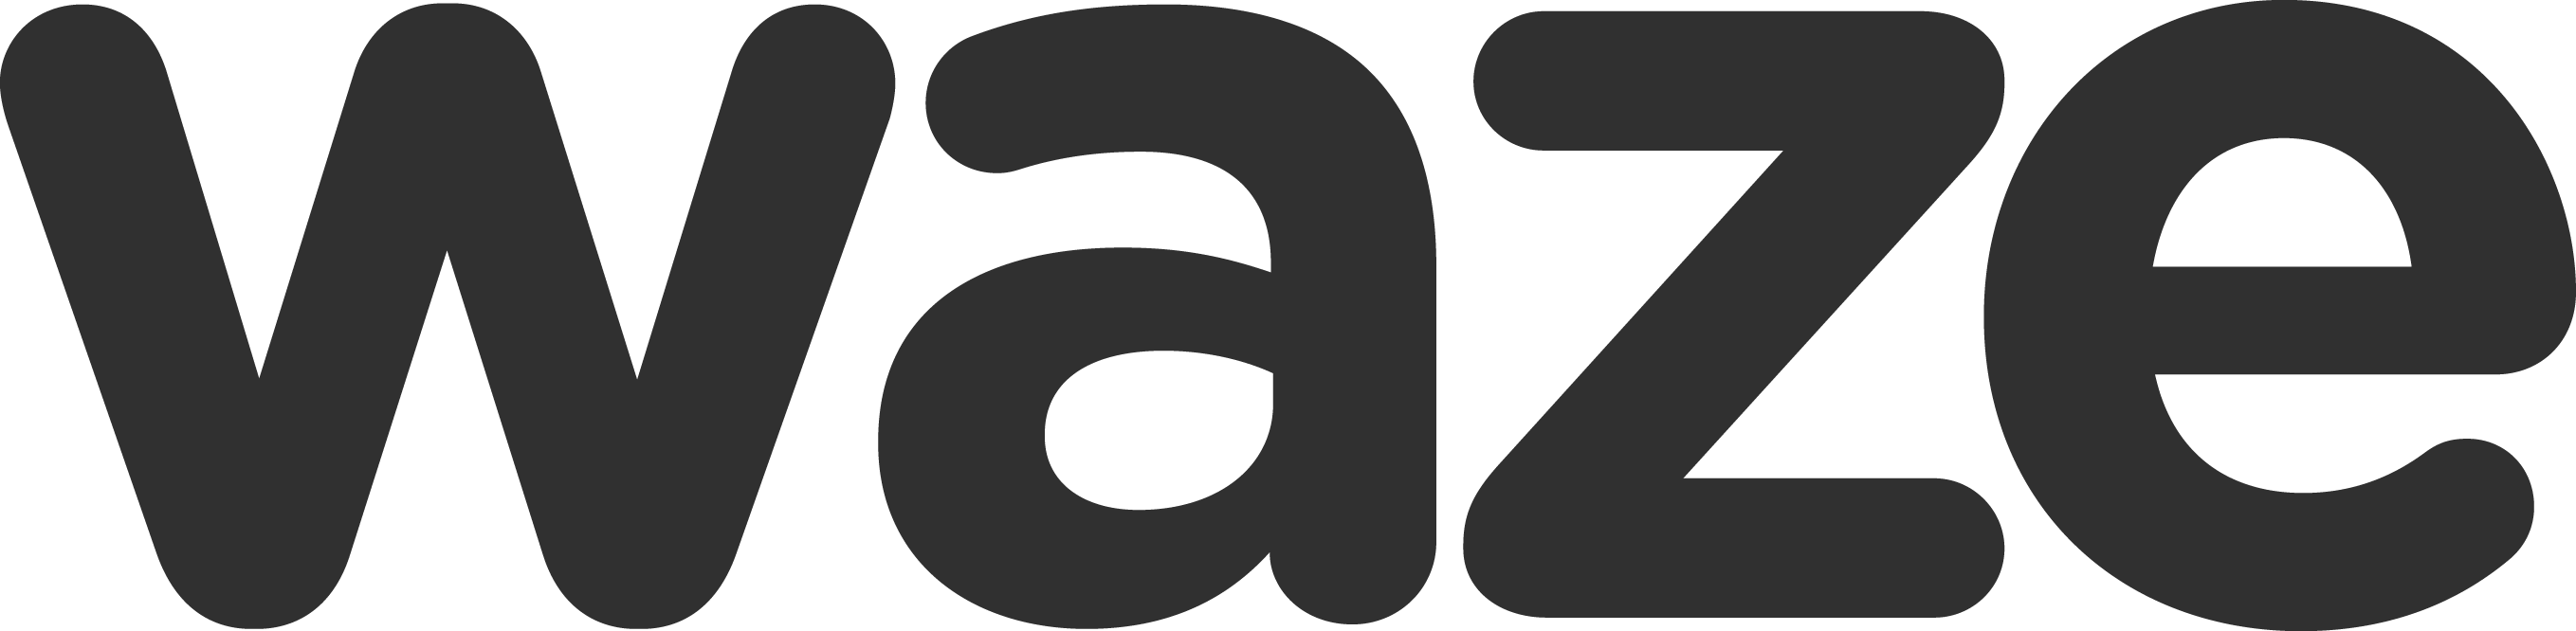 Waze Logo Vector PNG Transparent Waze Logo Vector.PNG Images. | PlusPNG